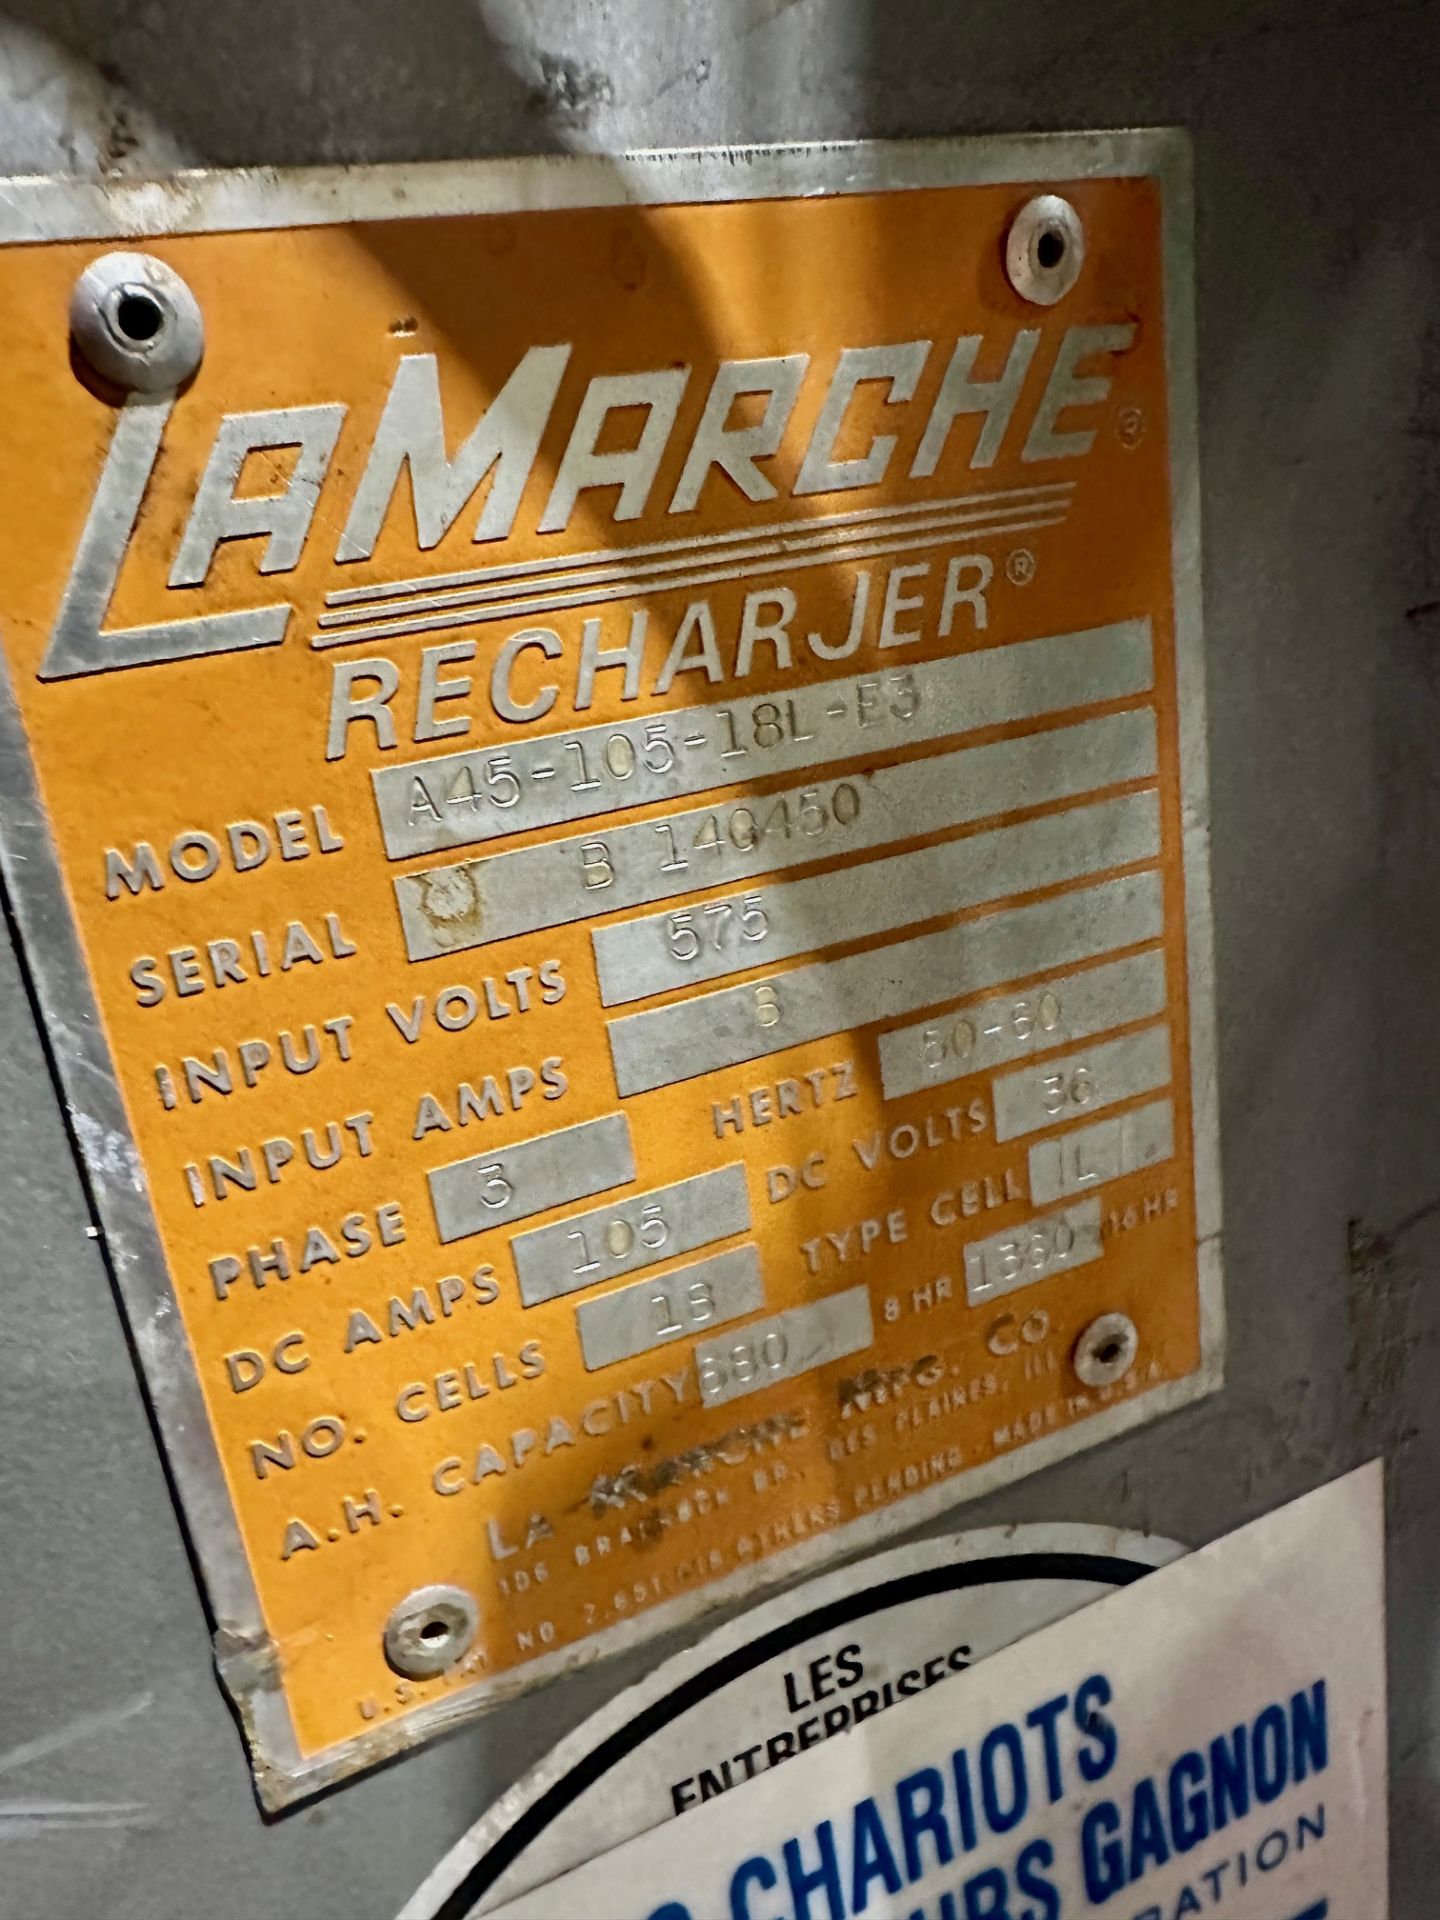 LaMarche / Battery chrager / Model: A45-105-18L-E3 / SN: B140450 / 3 Phase 575V - Image 2 of 2